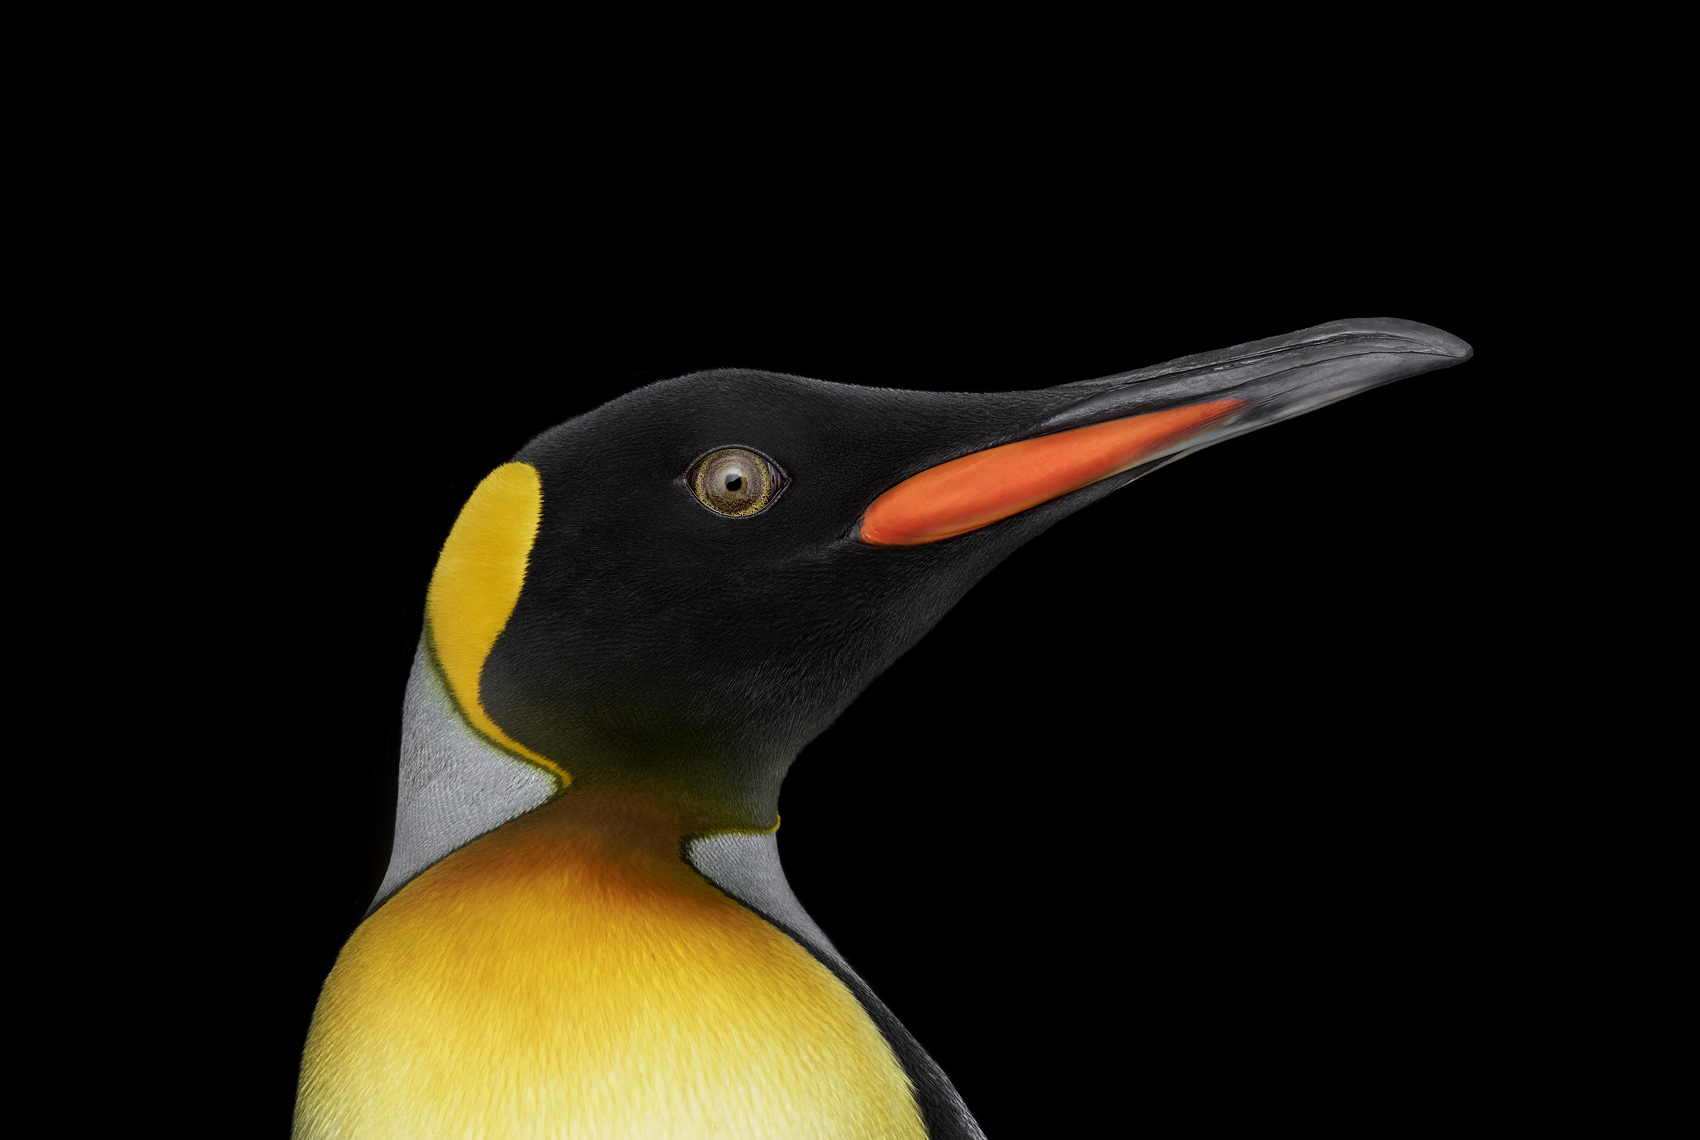 King penguin studio portrait by fine art wildlife photographer Brad Wilson